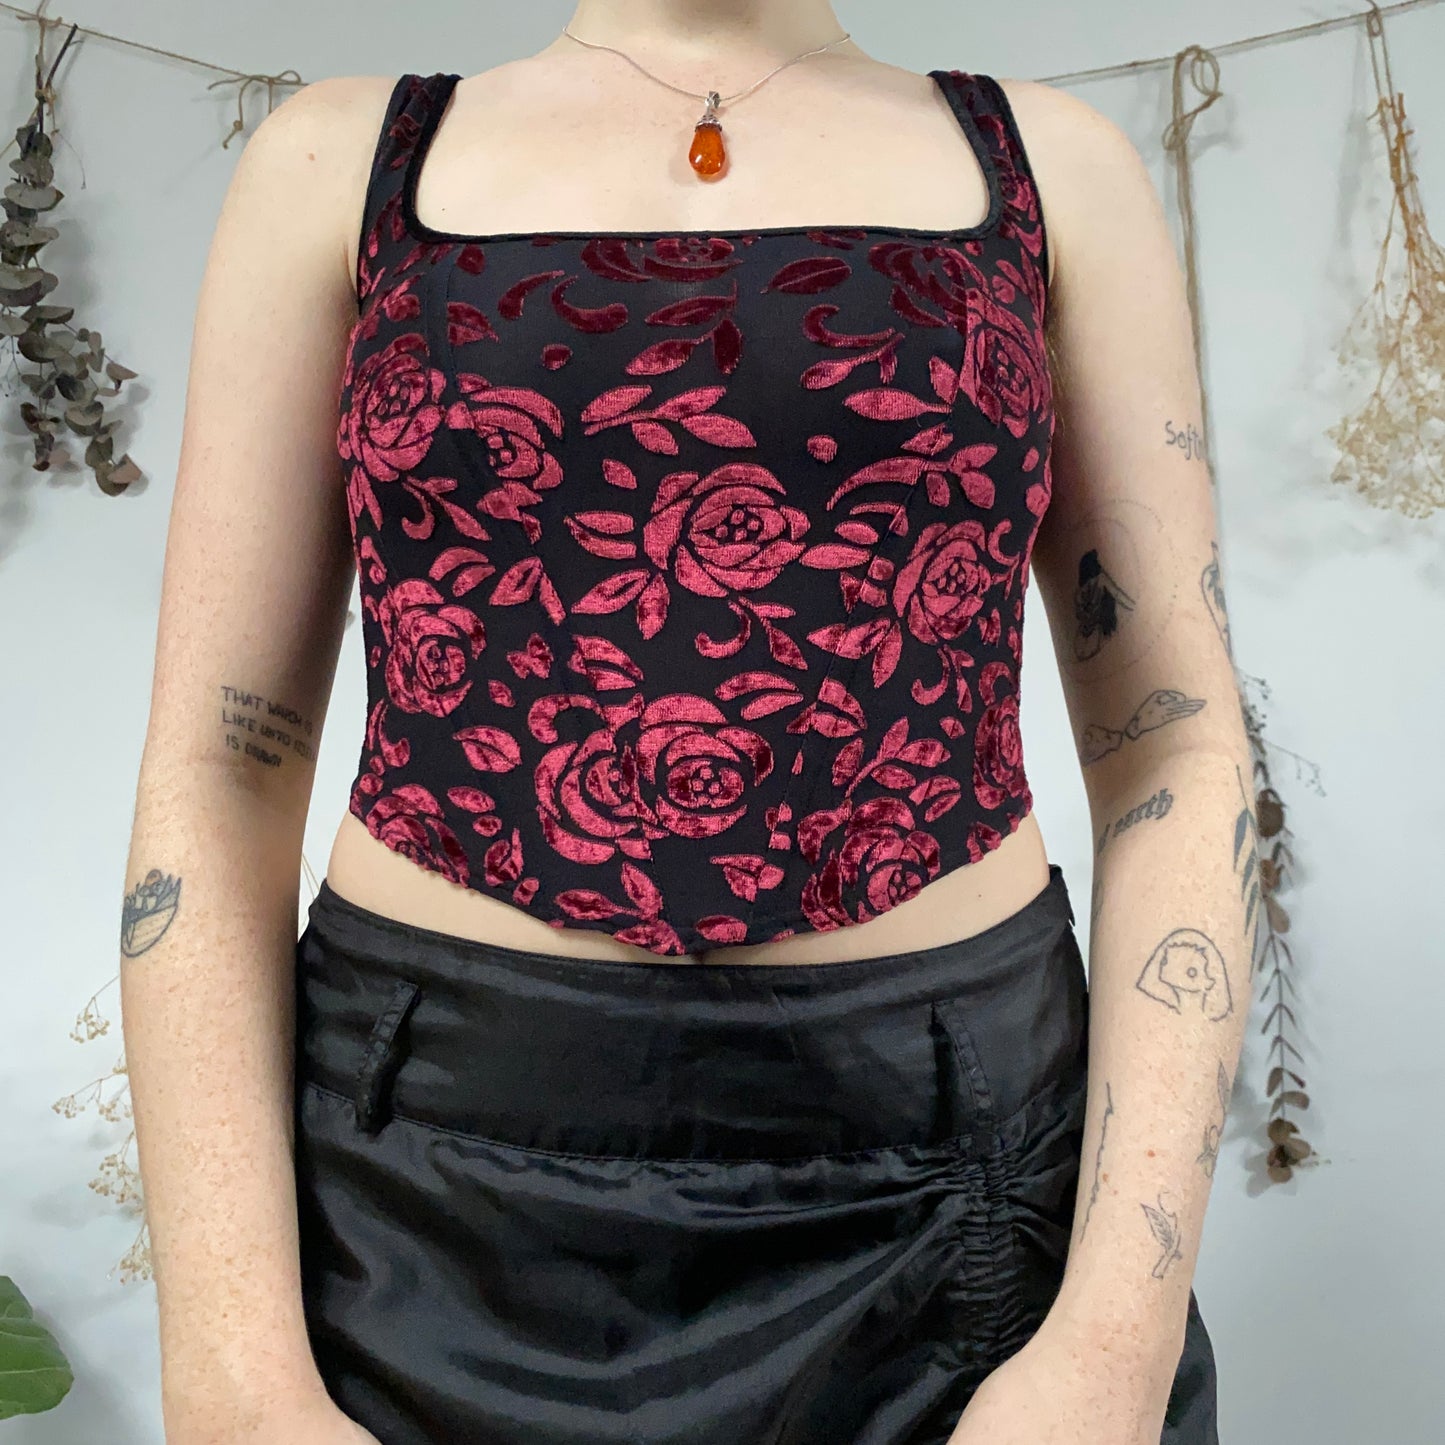 Velvet corset top - size S